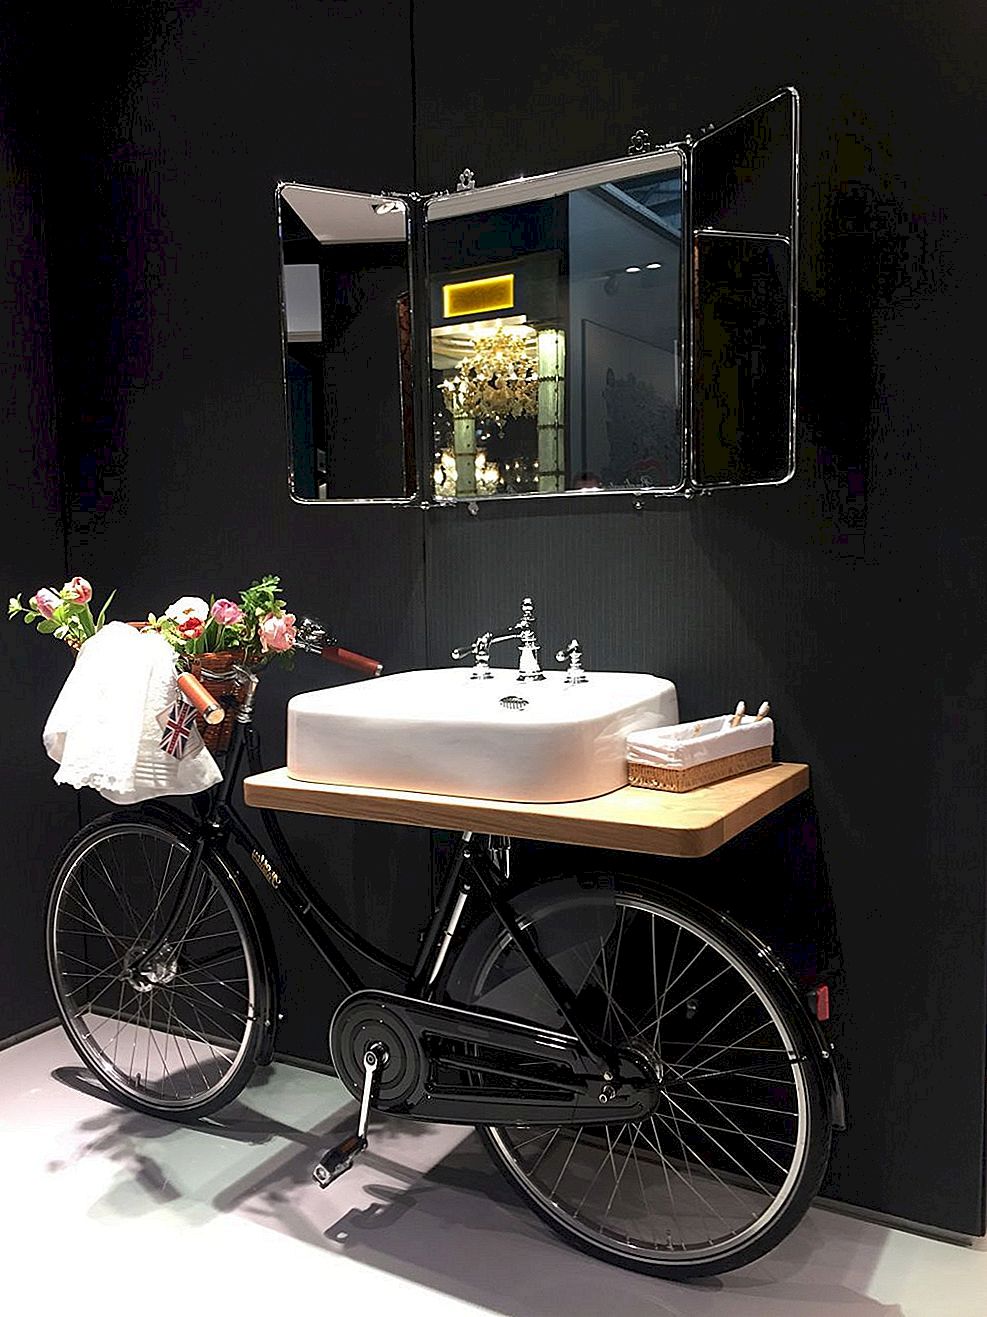 DIY badkamer ijdelheid ideeën perfect voor repurposers